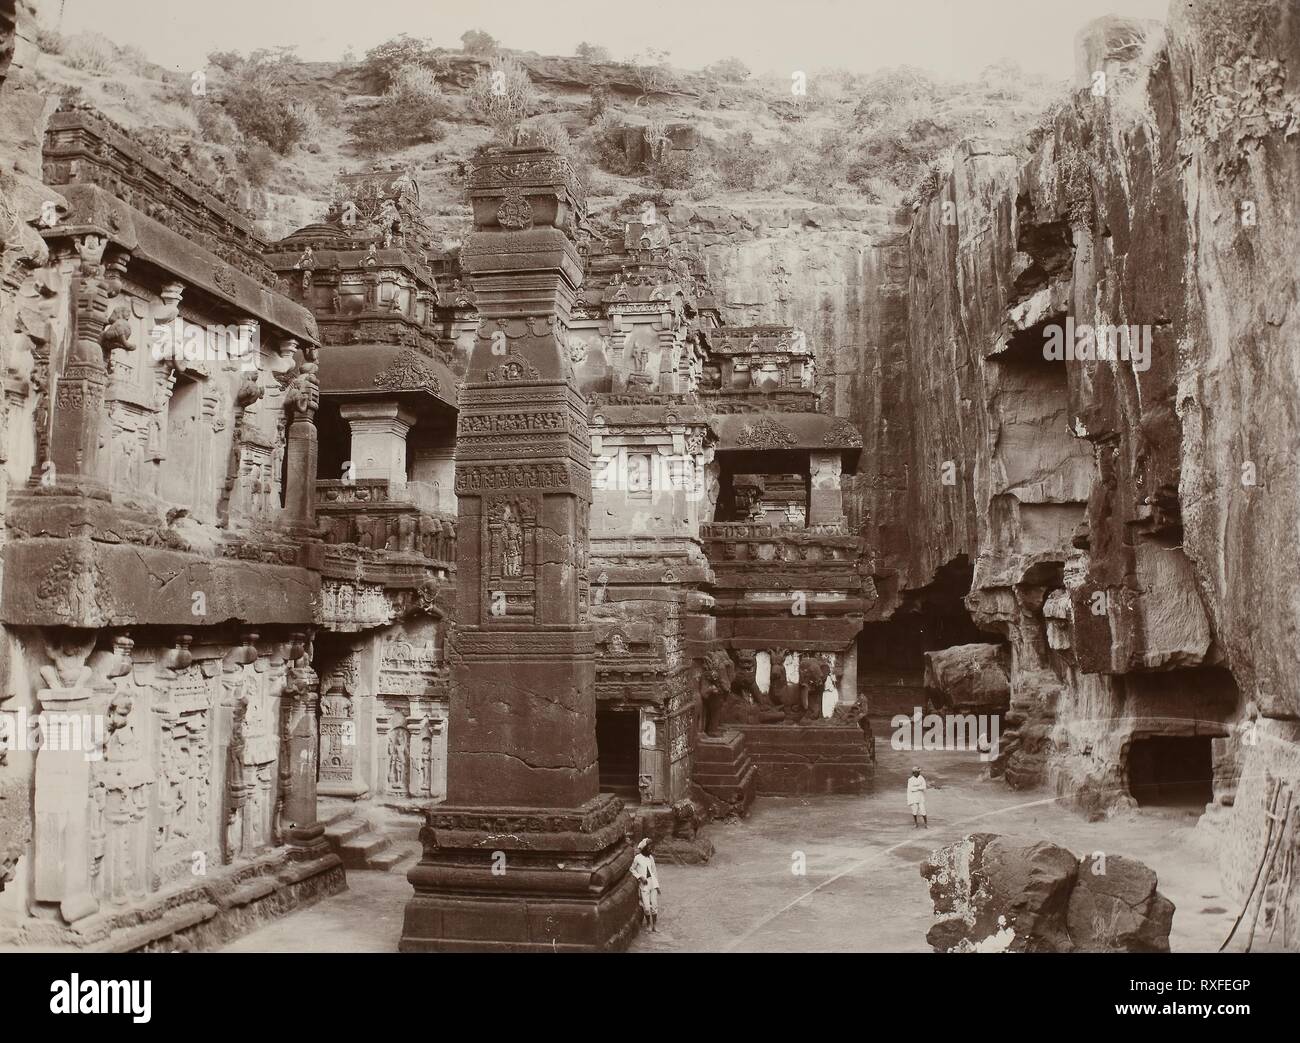 Khalias Rock-Hewn Temple, Ellora. Raja Deen Dayal; Indian, 1844-1905. Date: 1885-1895. Dimensions: 21 x 28.9 cm (image/paper). Gelatin silver print. Origin: India. Museum: The Chicago Art Institute. Stock Photo